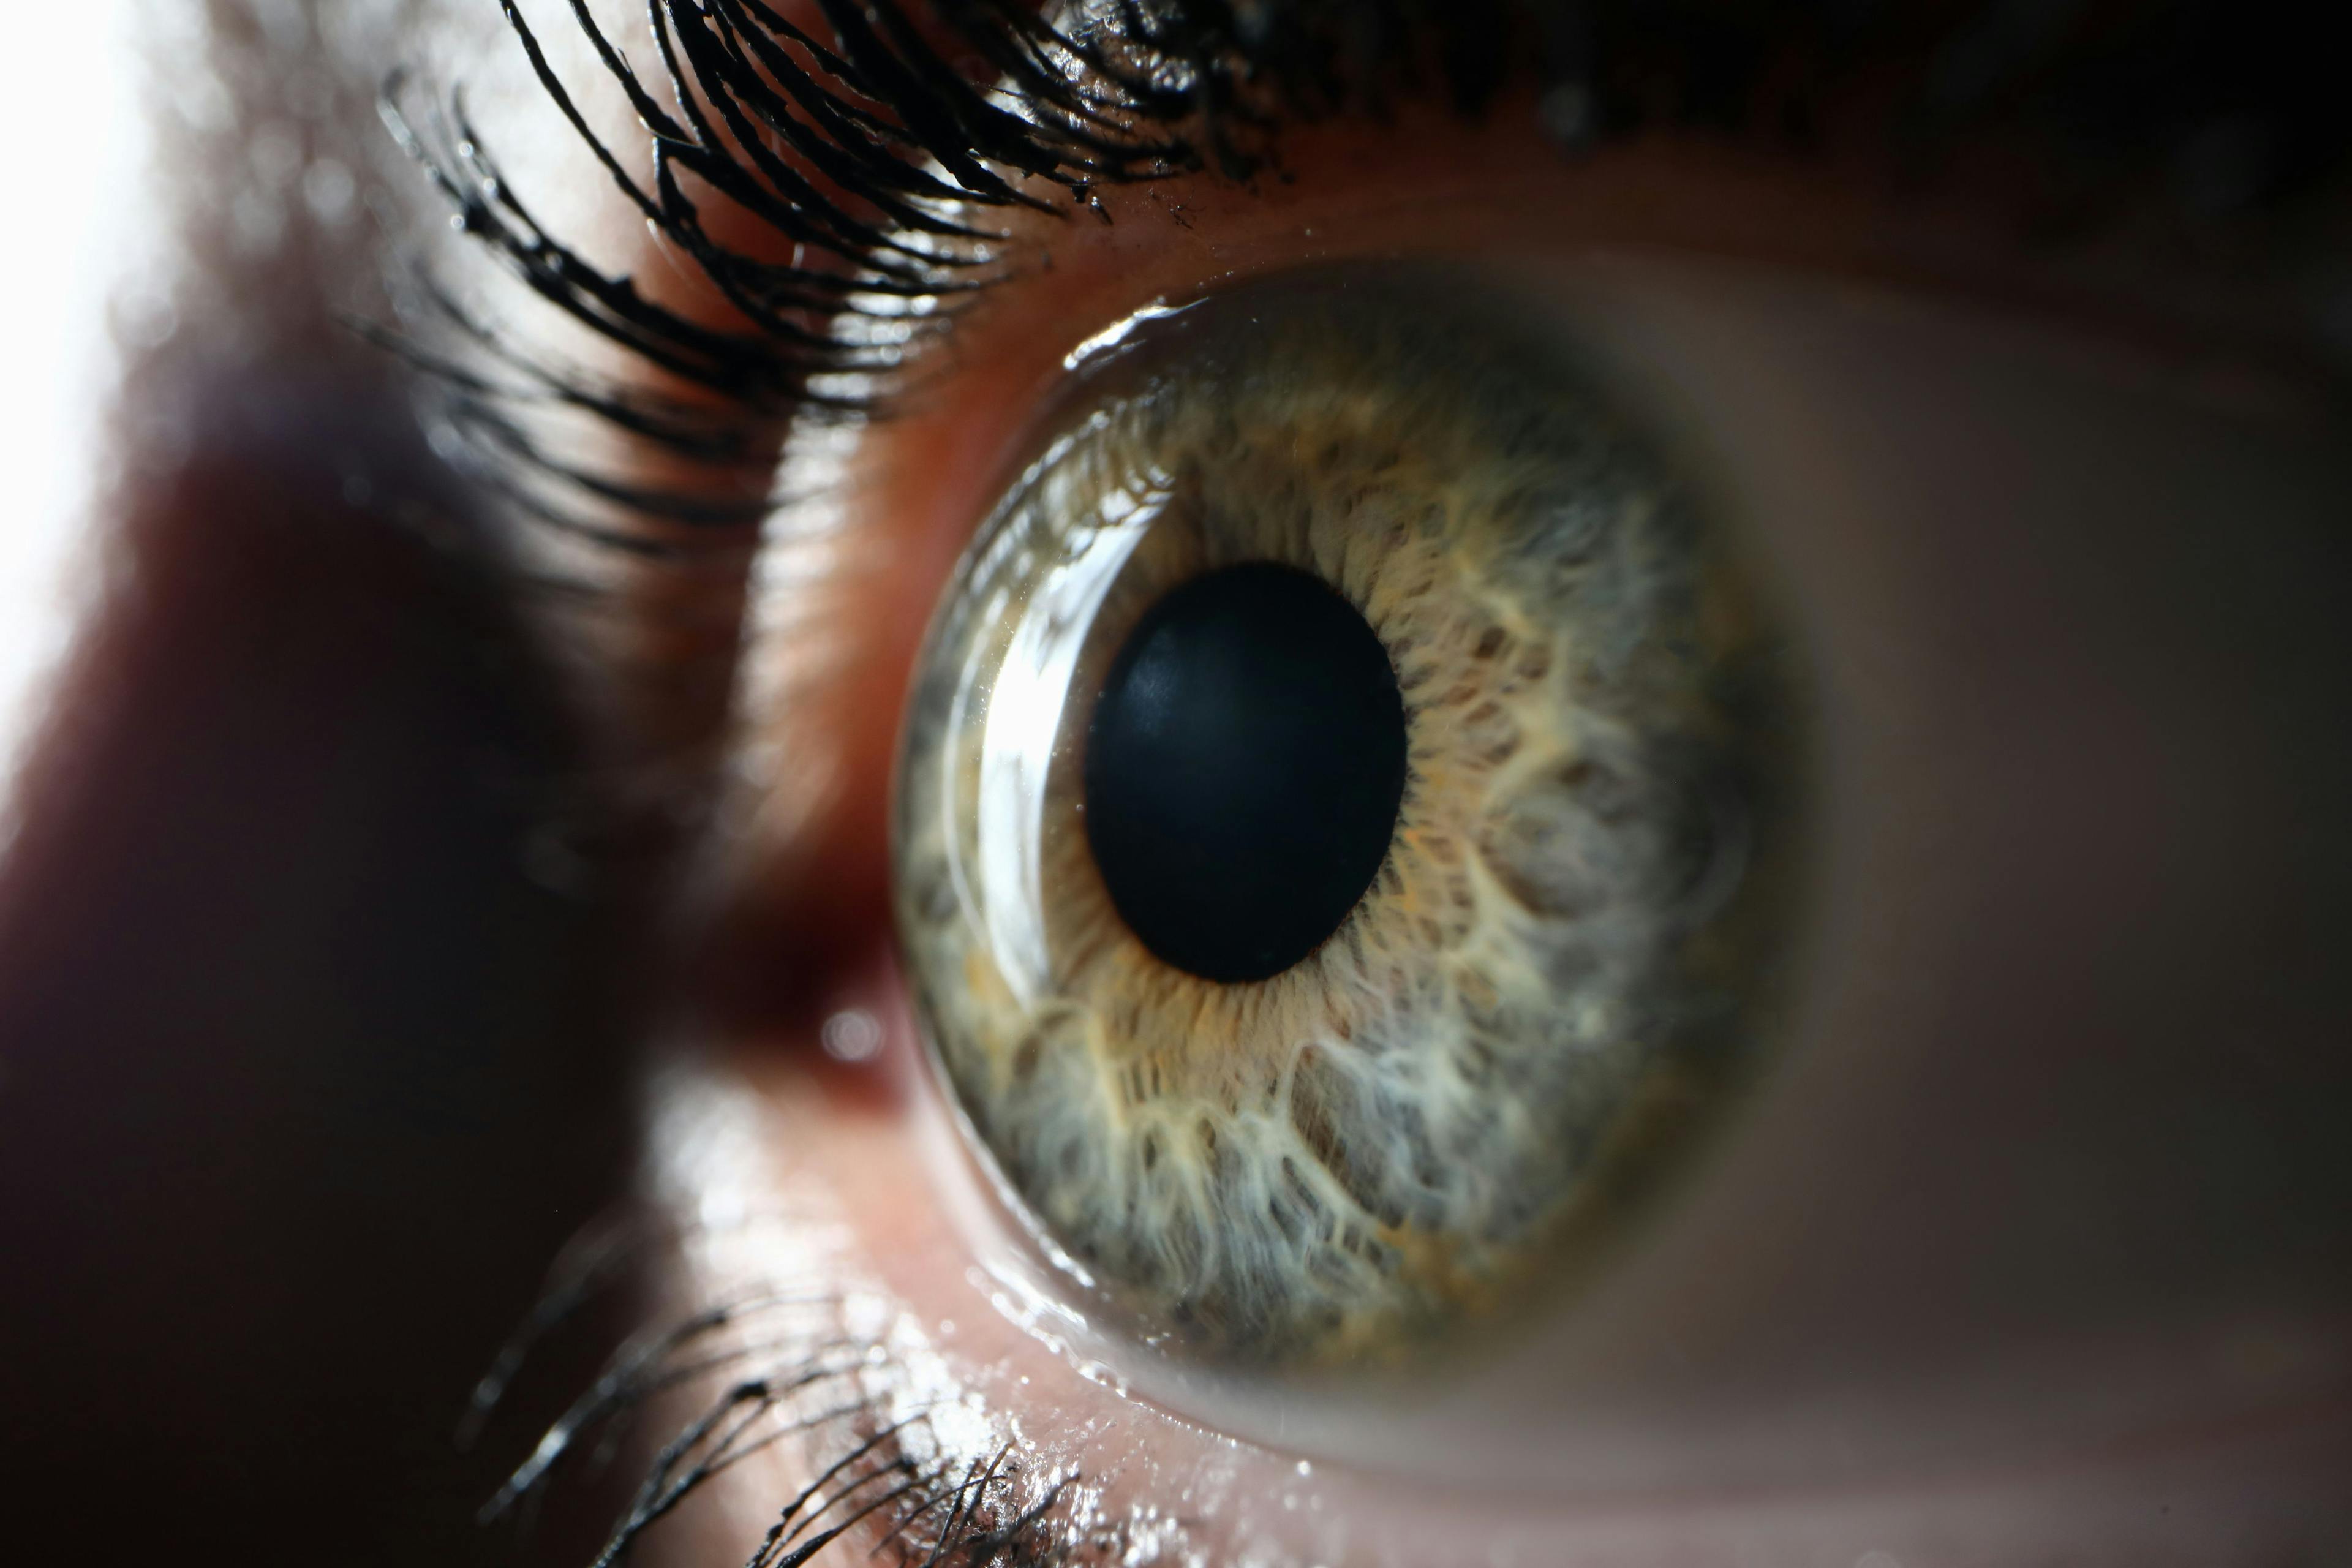 Cholesterol and diabetes drugs may lessen risk of degenerative eye disease of aging